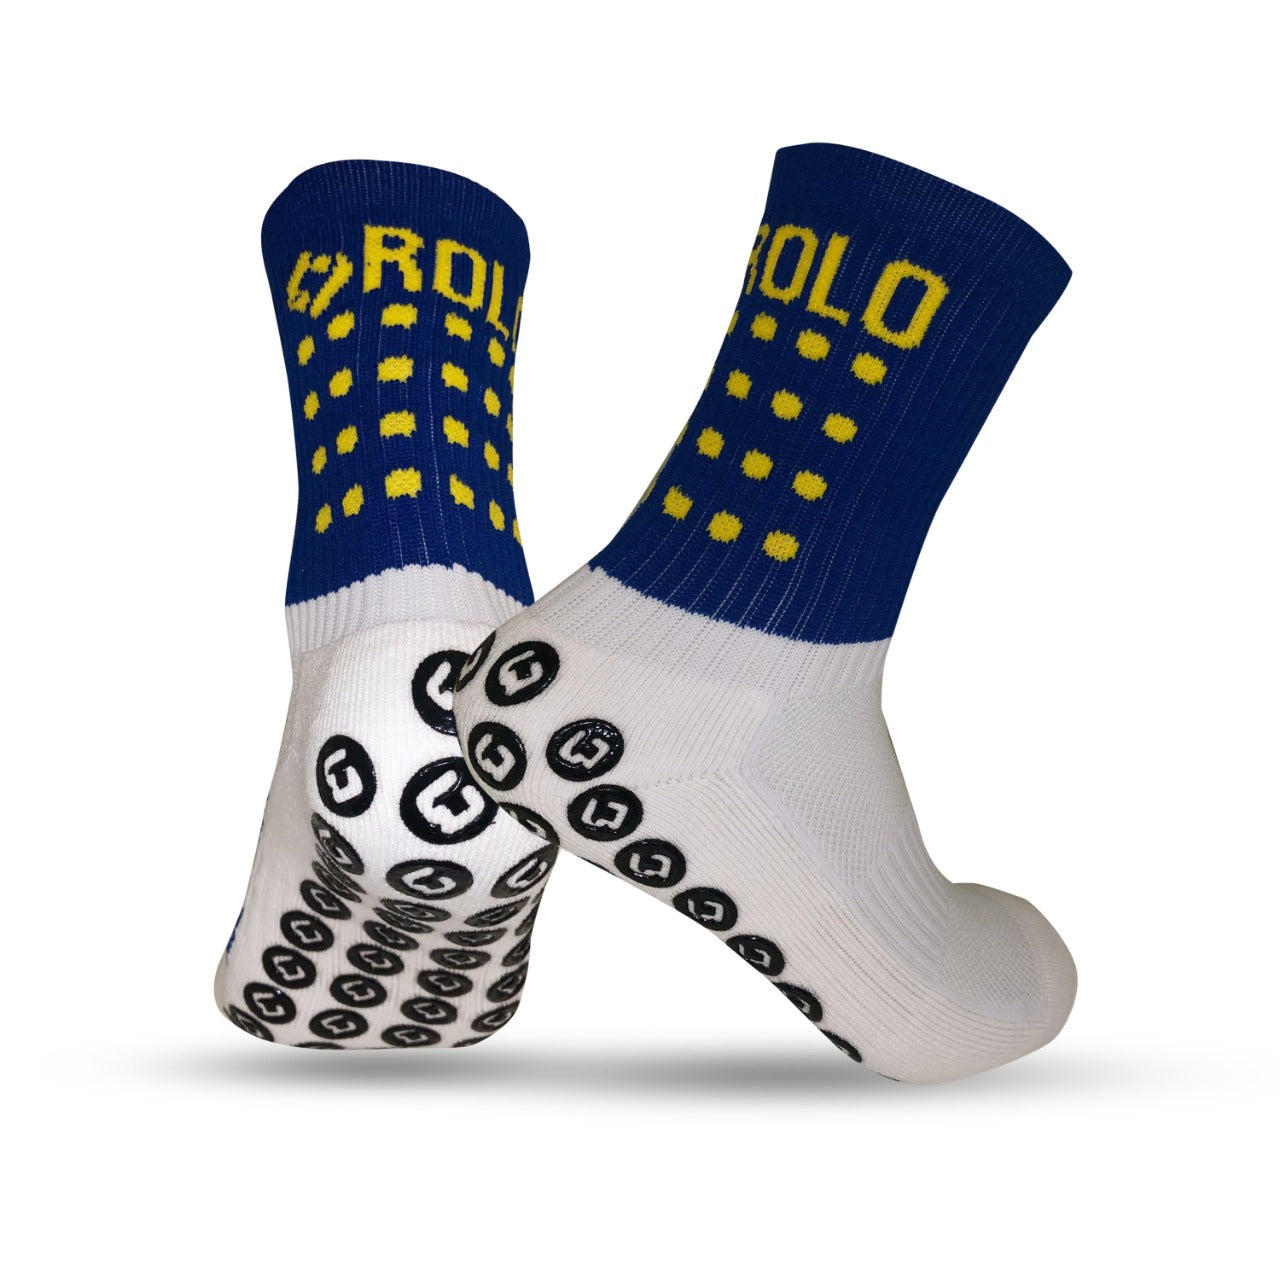 Blue & Yellow Grip Sports Socks